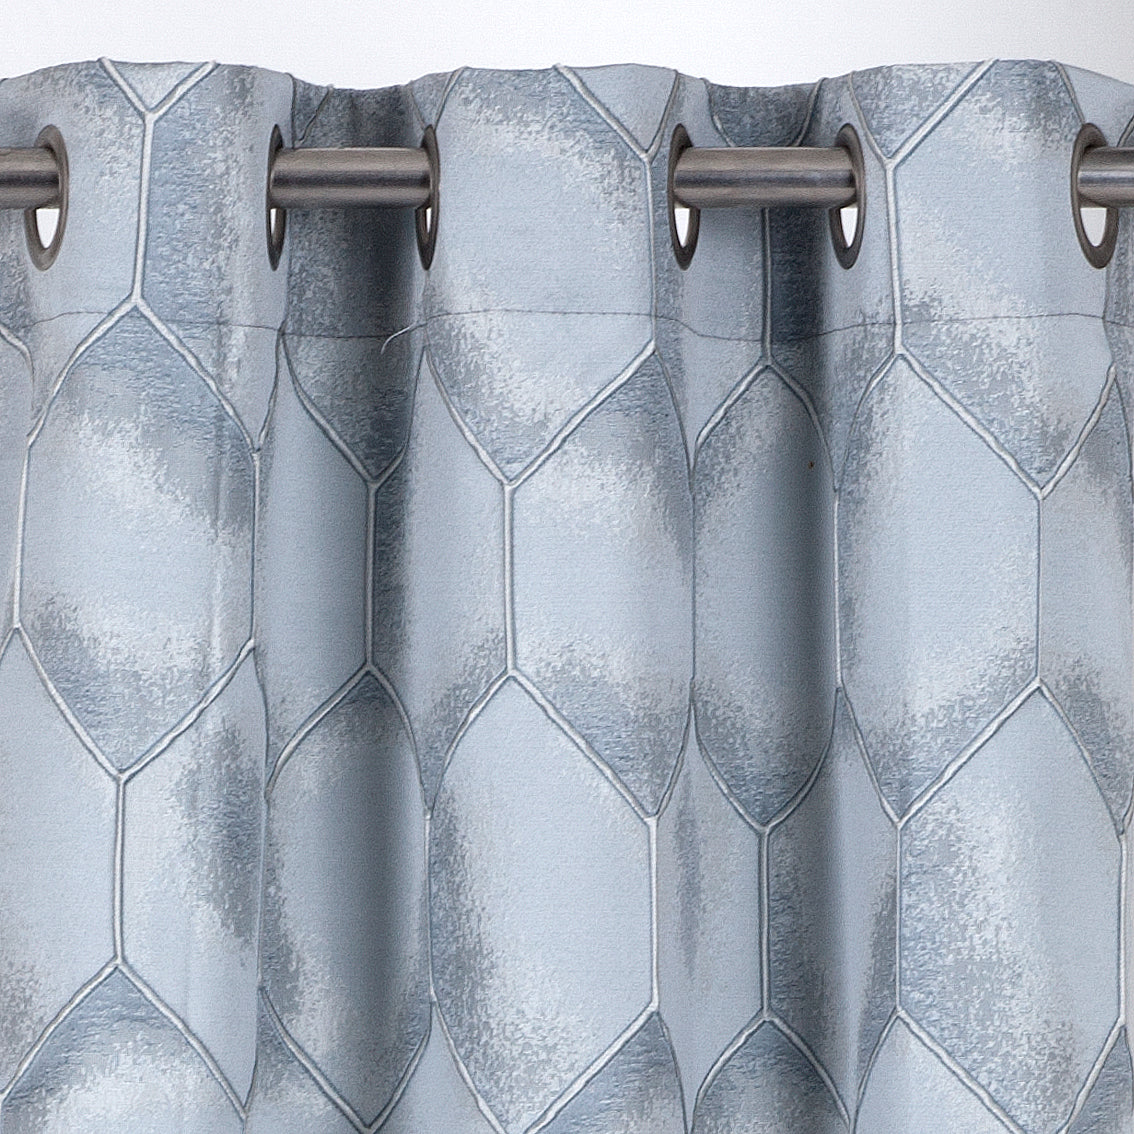 Dainty Home Tiles Textured 3D Lustrous Geometric Look Room Darkening Grommet Panel Pair